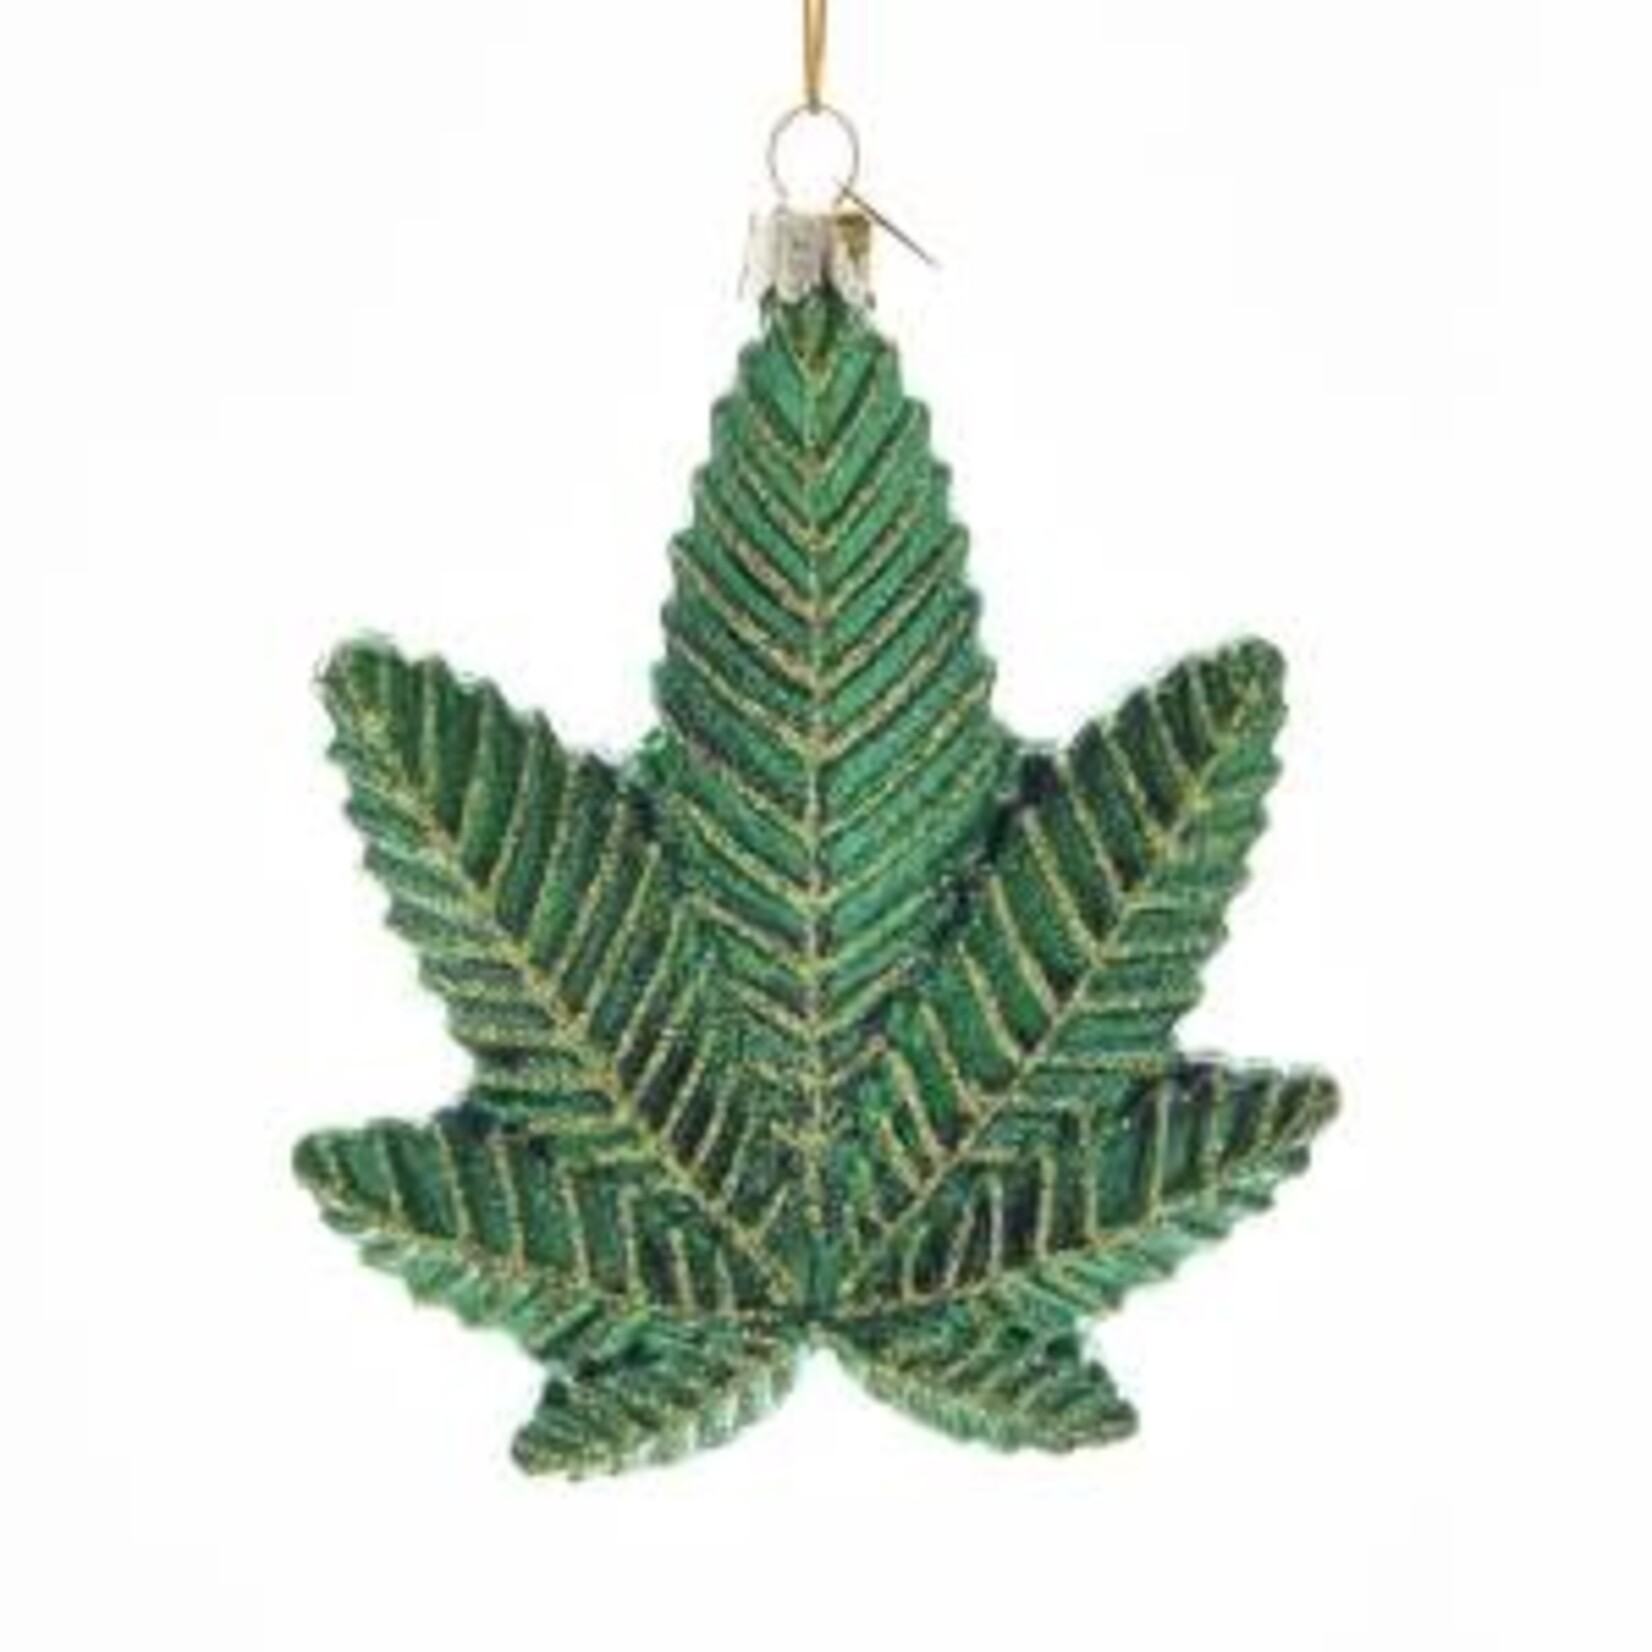 Ornament - Cannabis Leaf (Weed Marijuana)